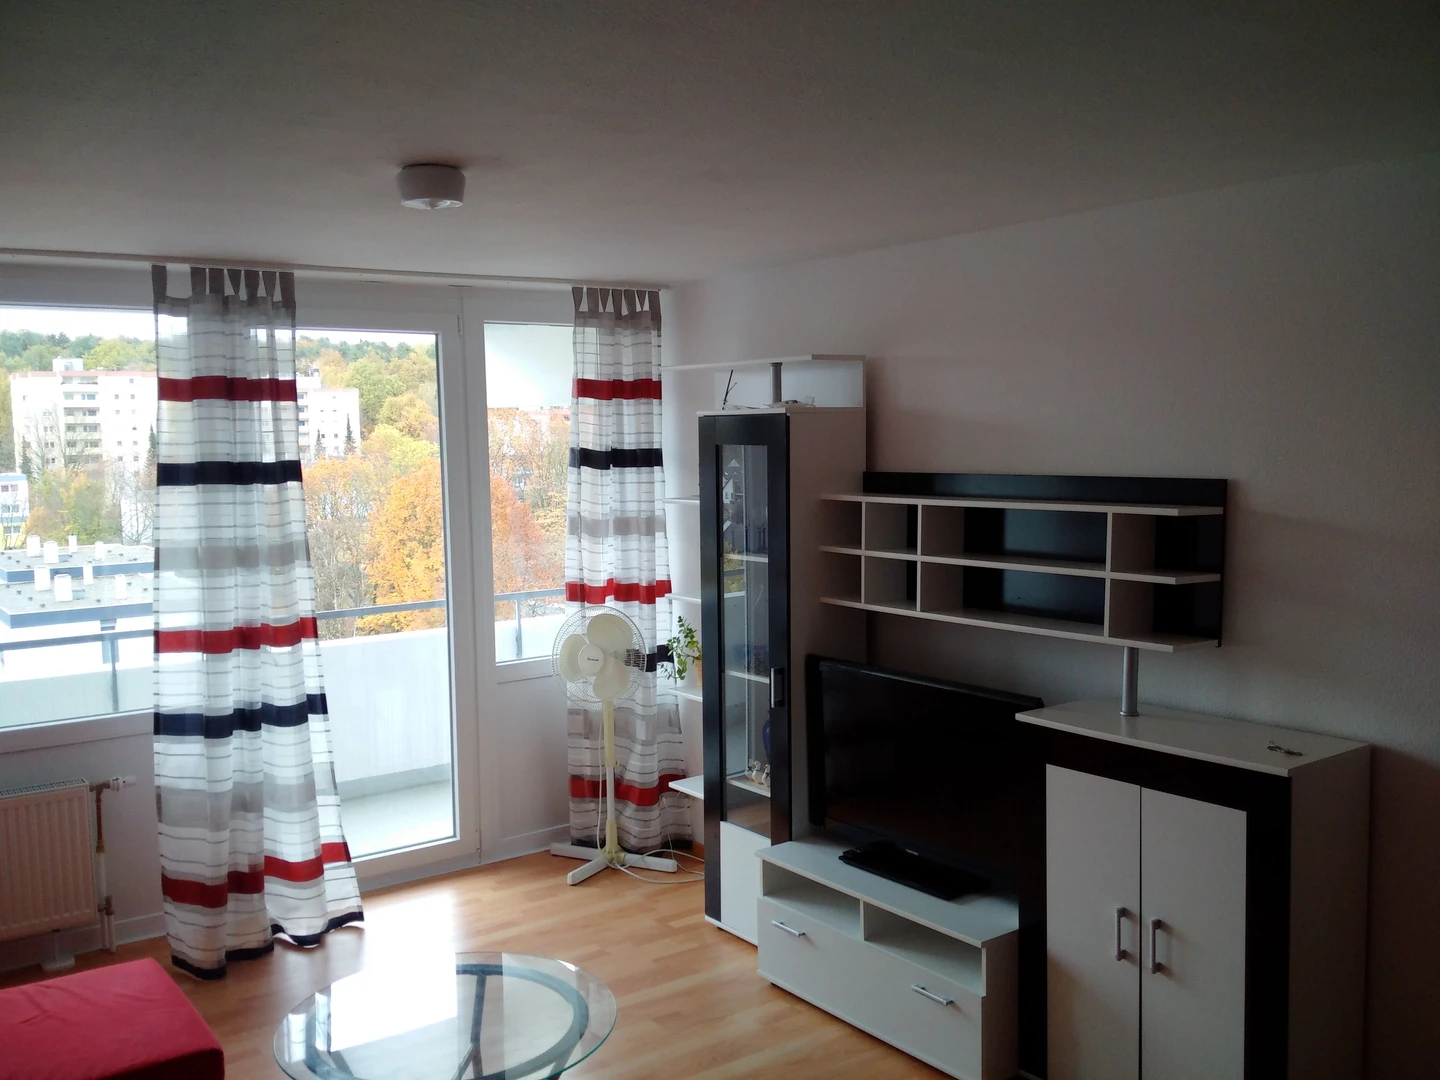 Cheap private room in Kaiserslautern